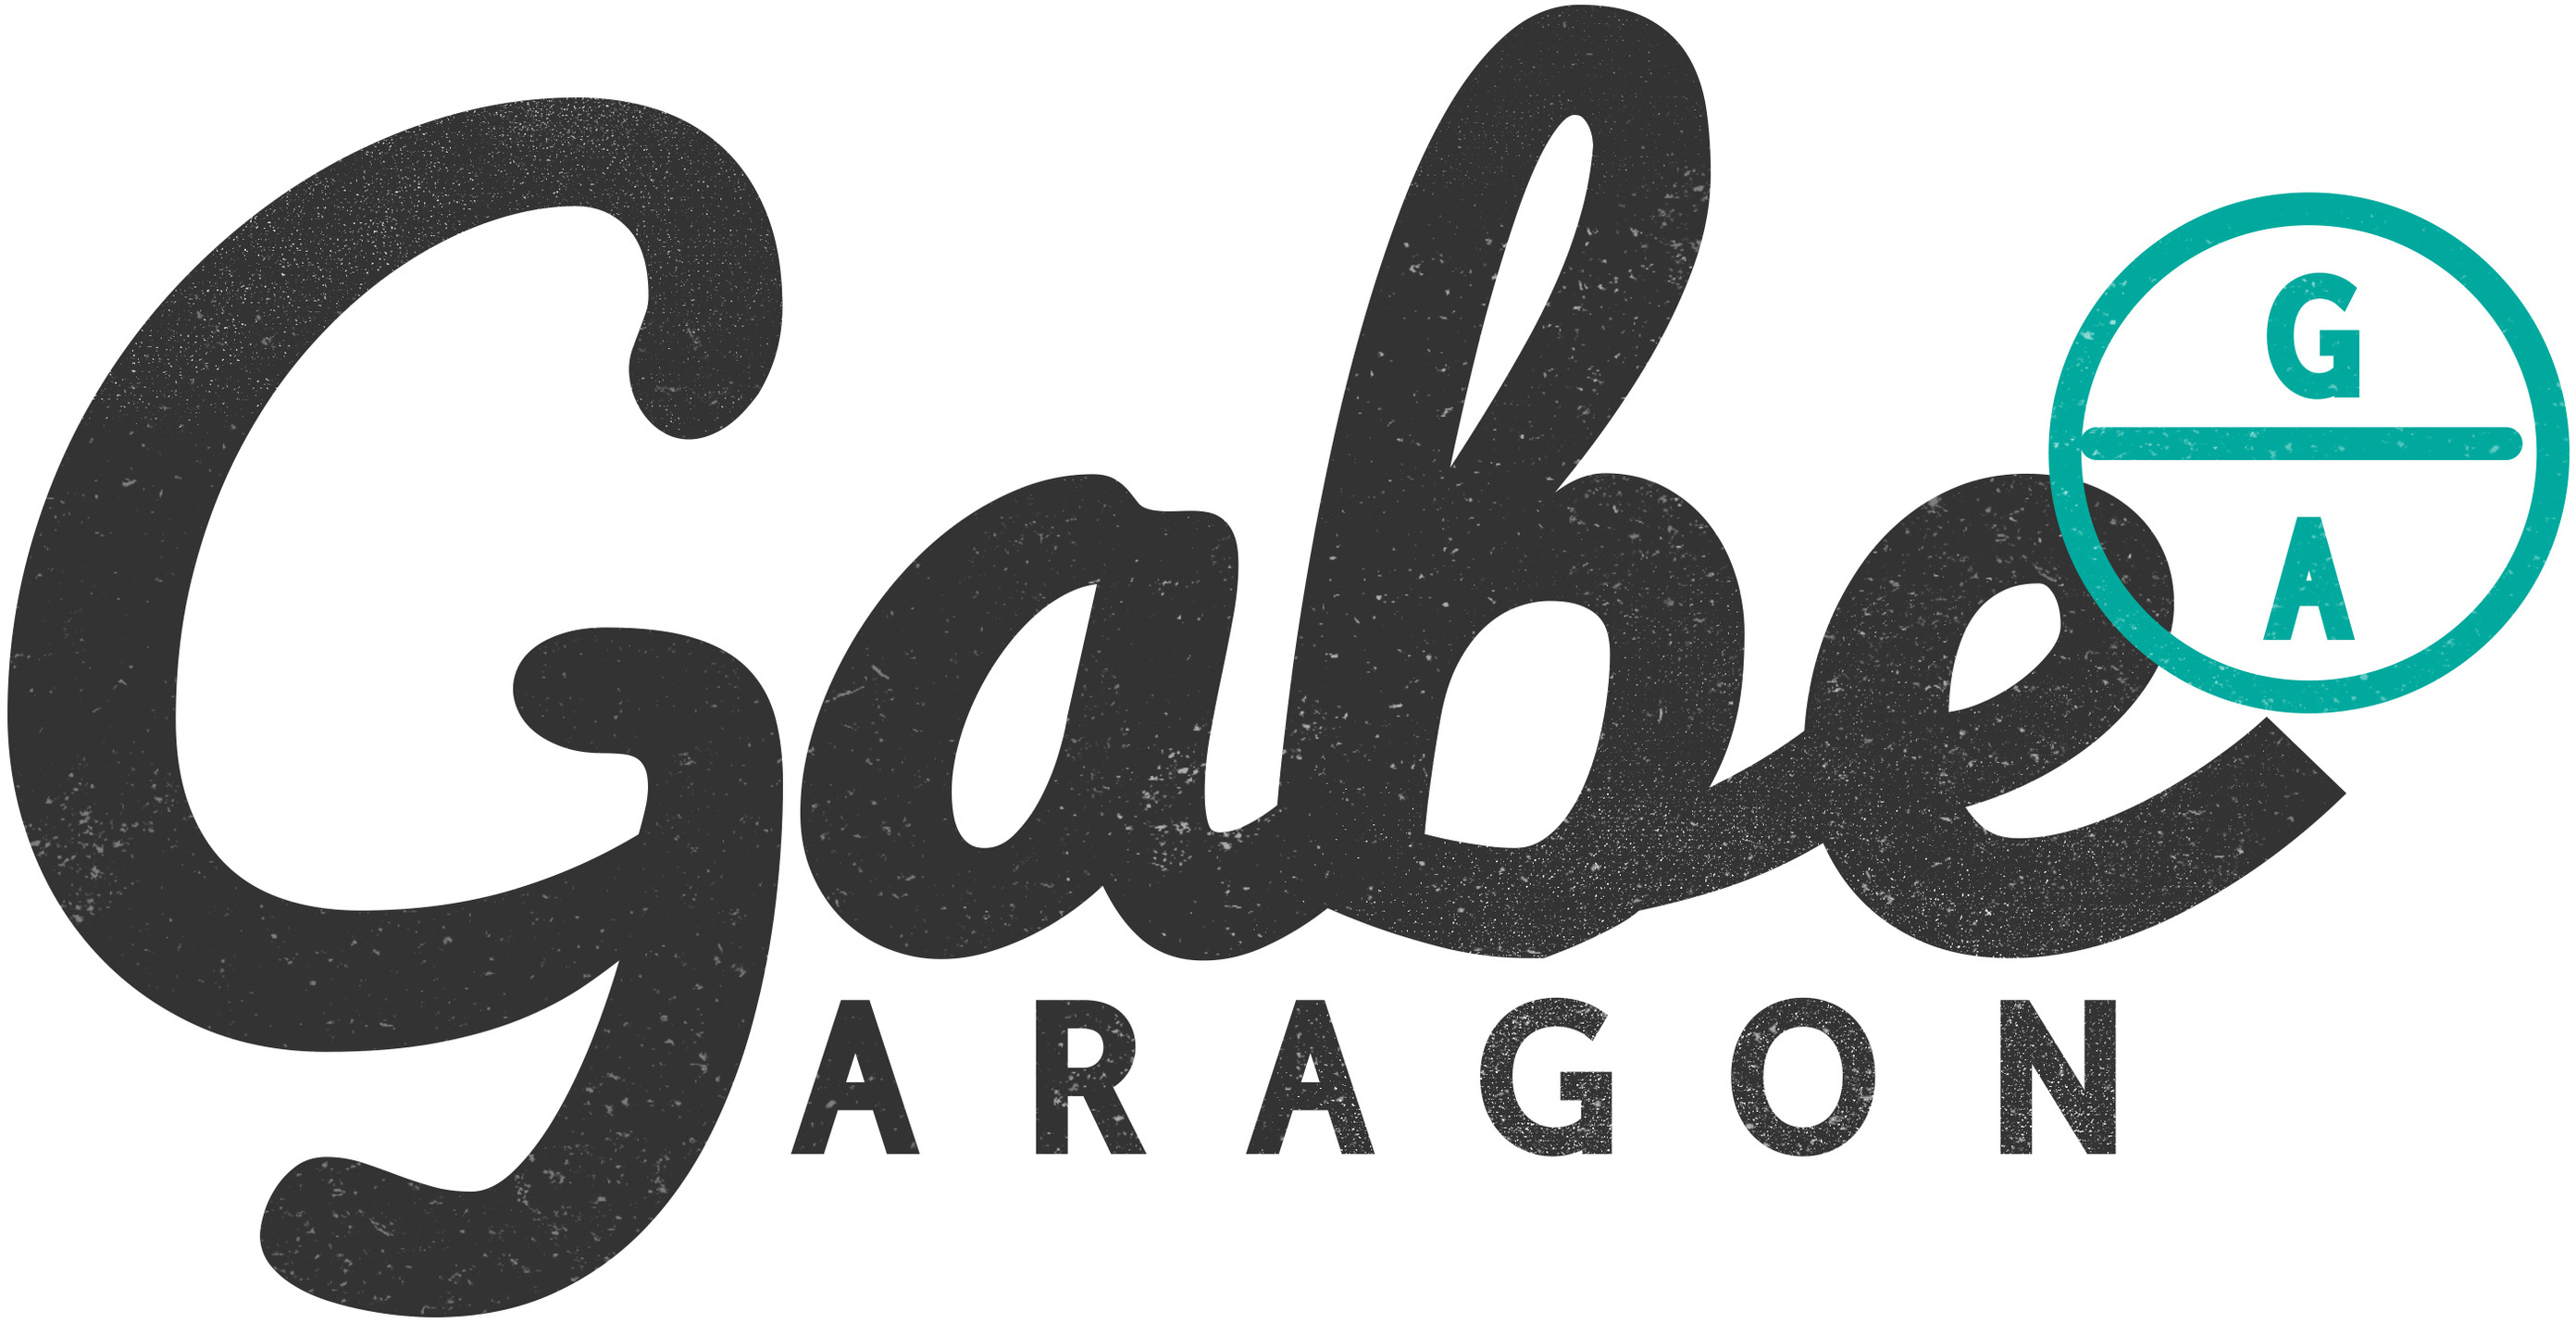 Gabe Aragon's Portfolio